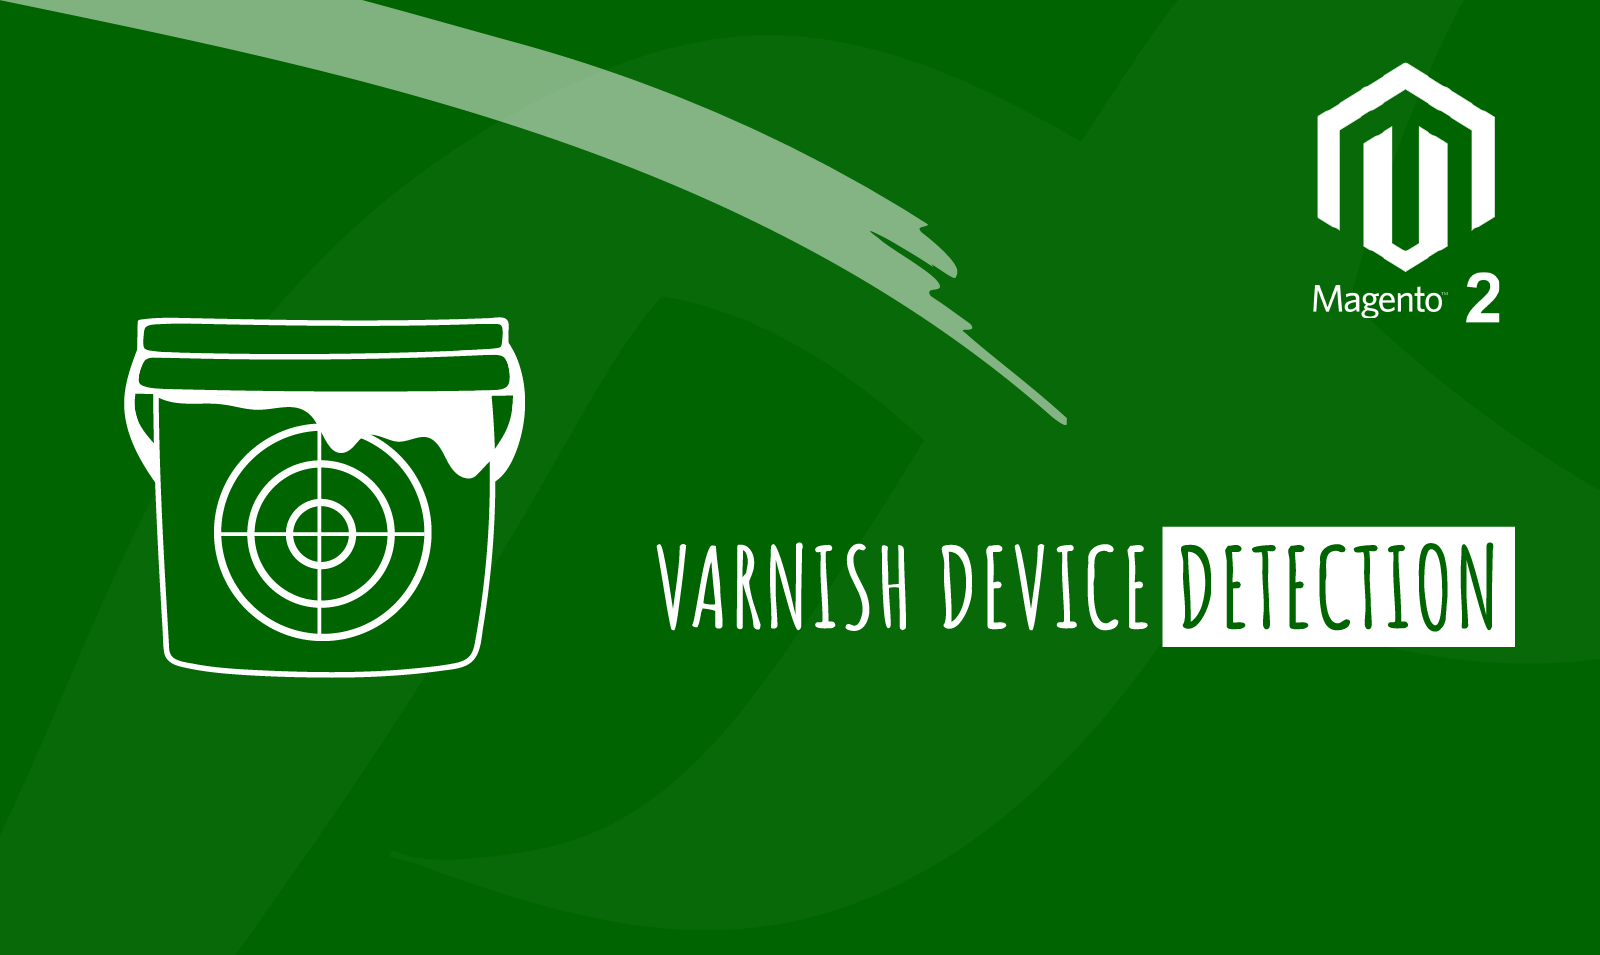 Magento 2 - Varnish Device Detection